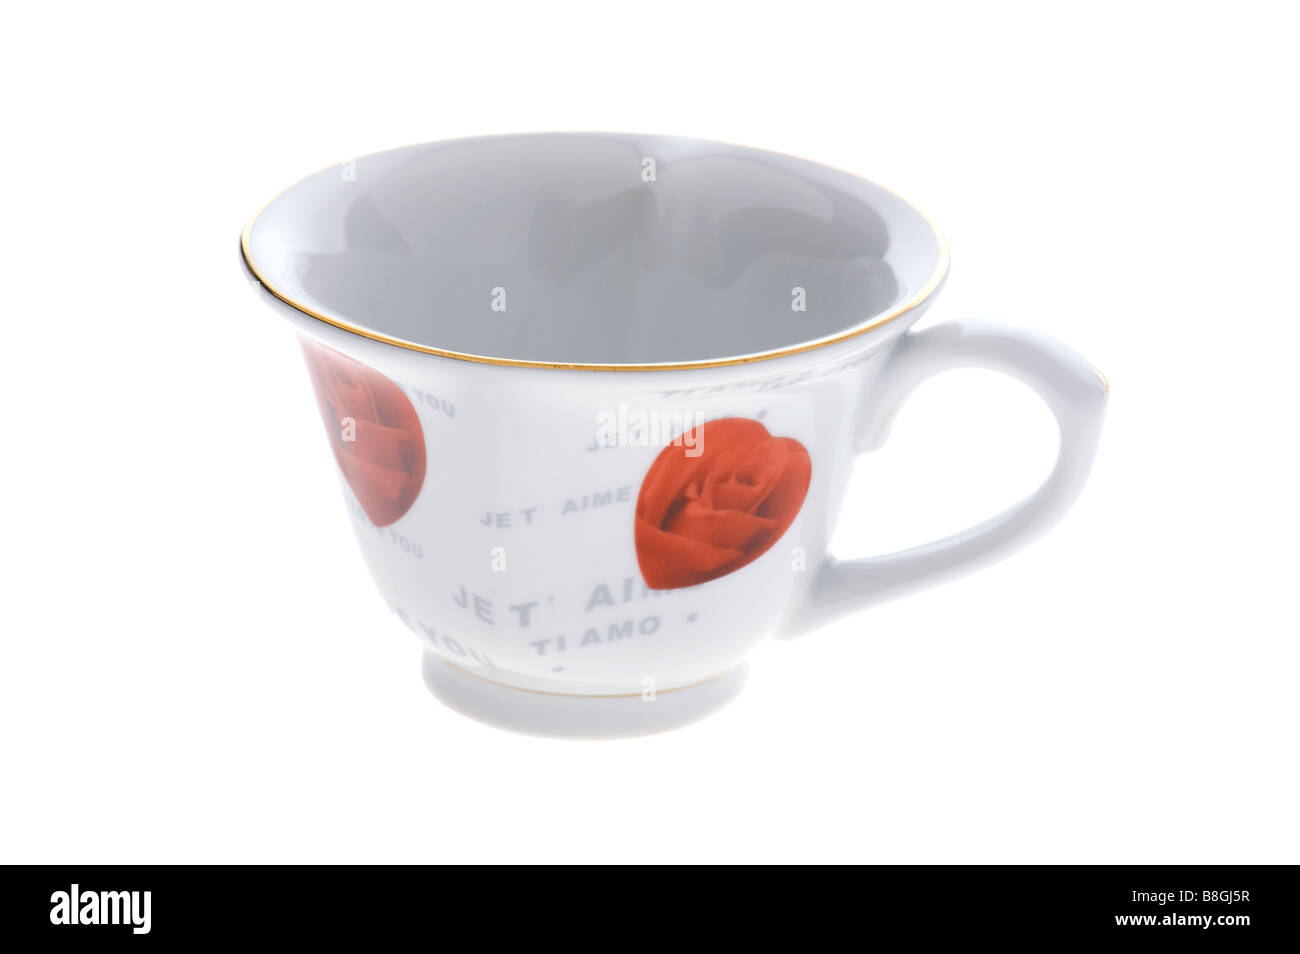 object on white kitchen utensil Tea cup Stock Photo